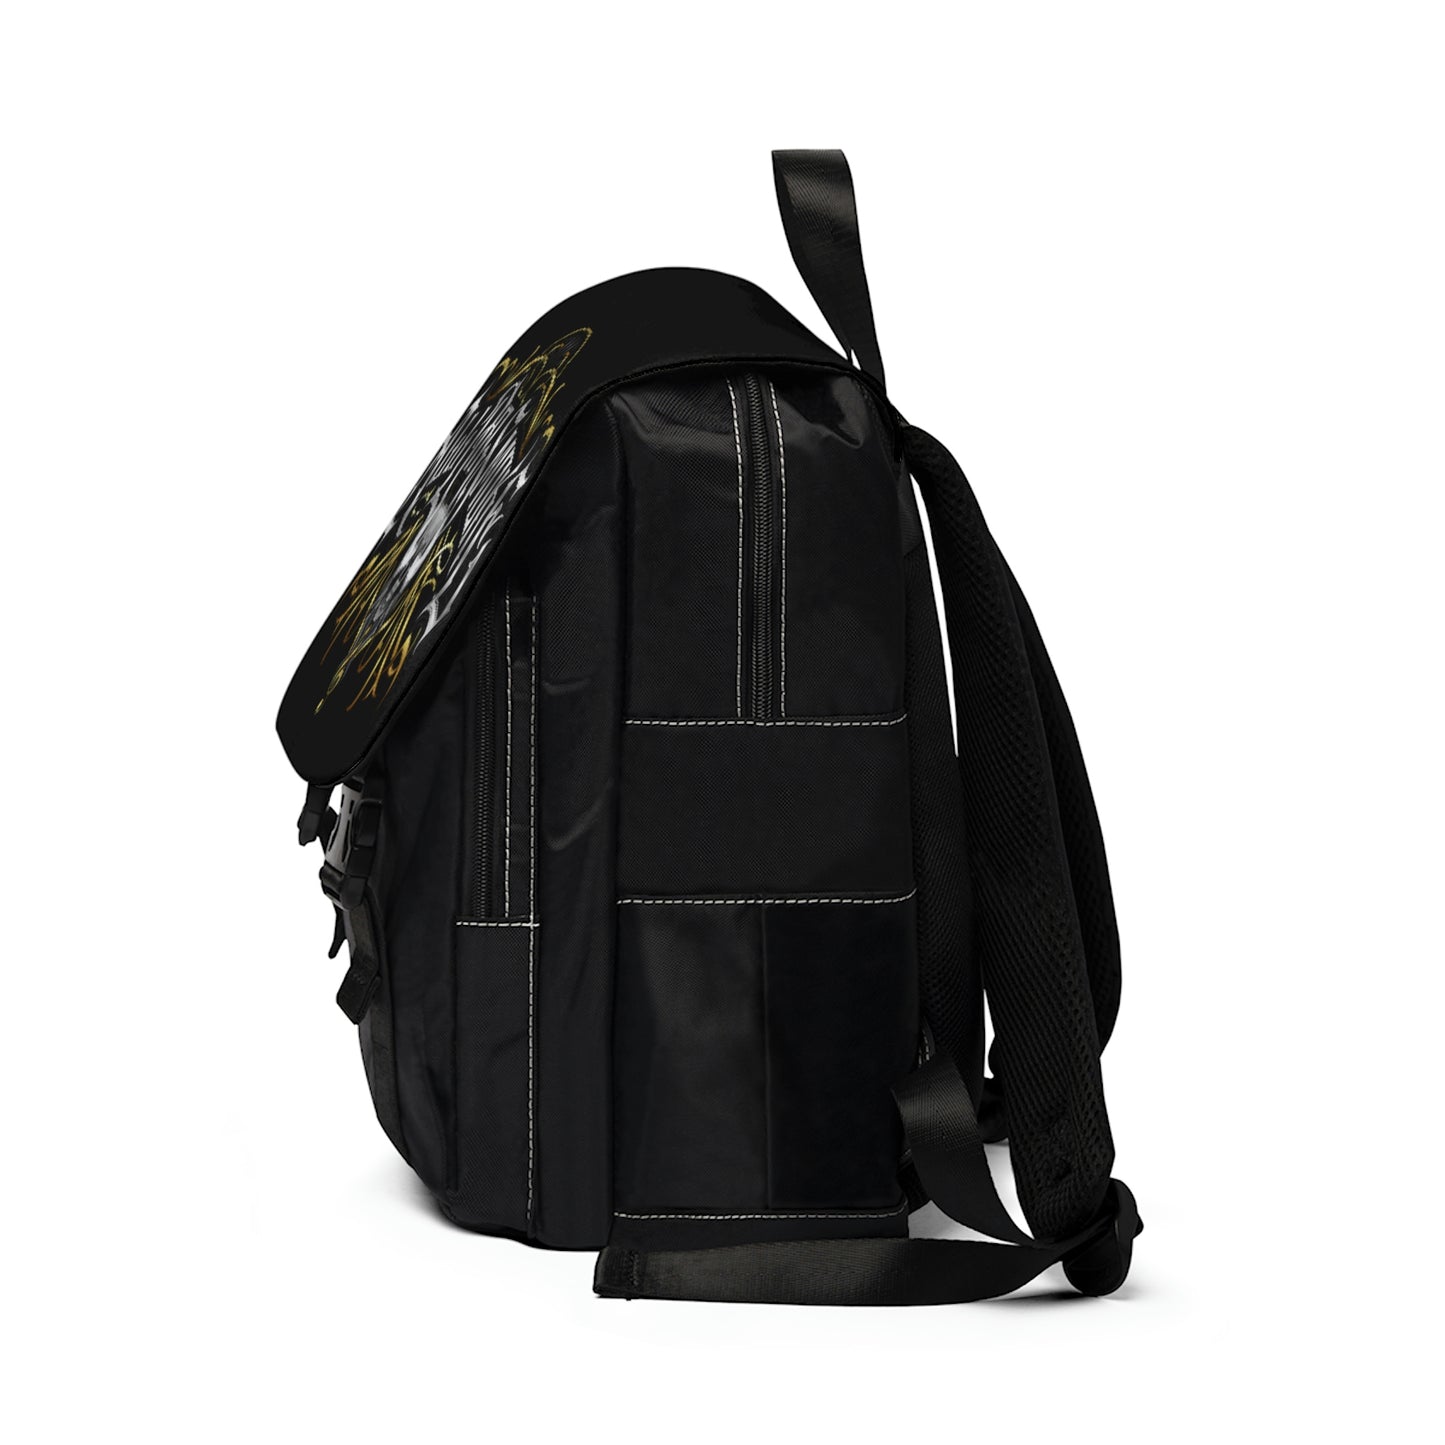 "Youth Sized" Shoulder Backpack